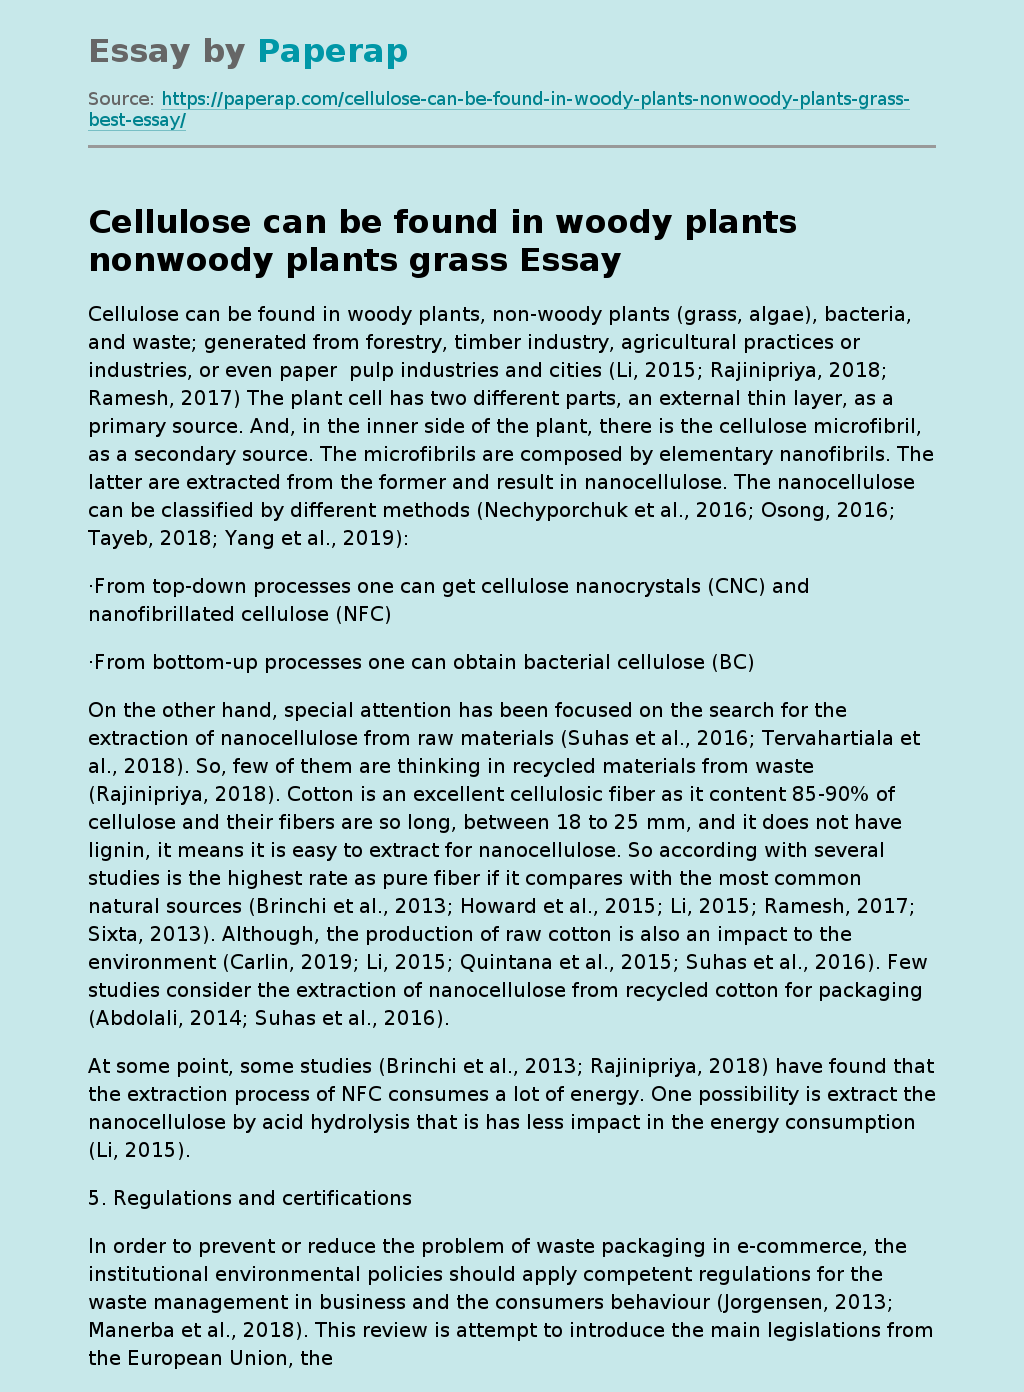 Cellulose Is the Most Abundant Organic Matter